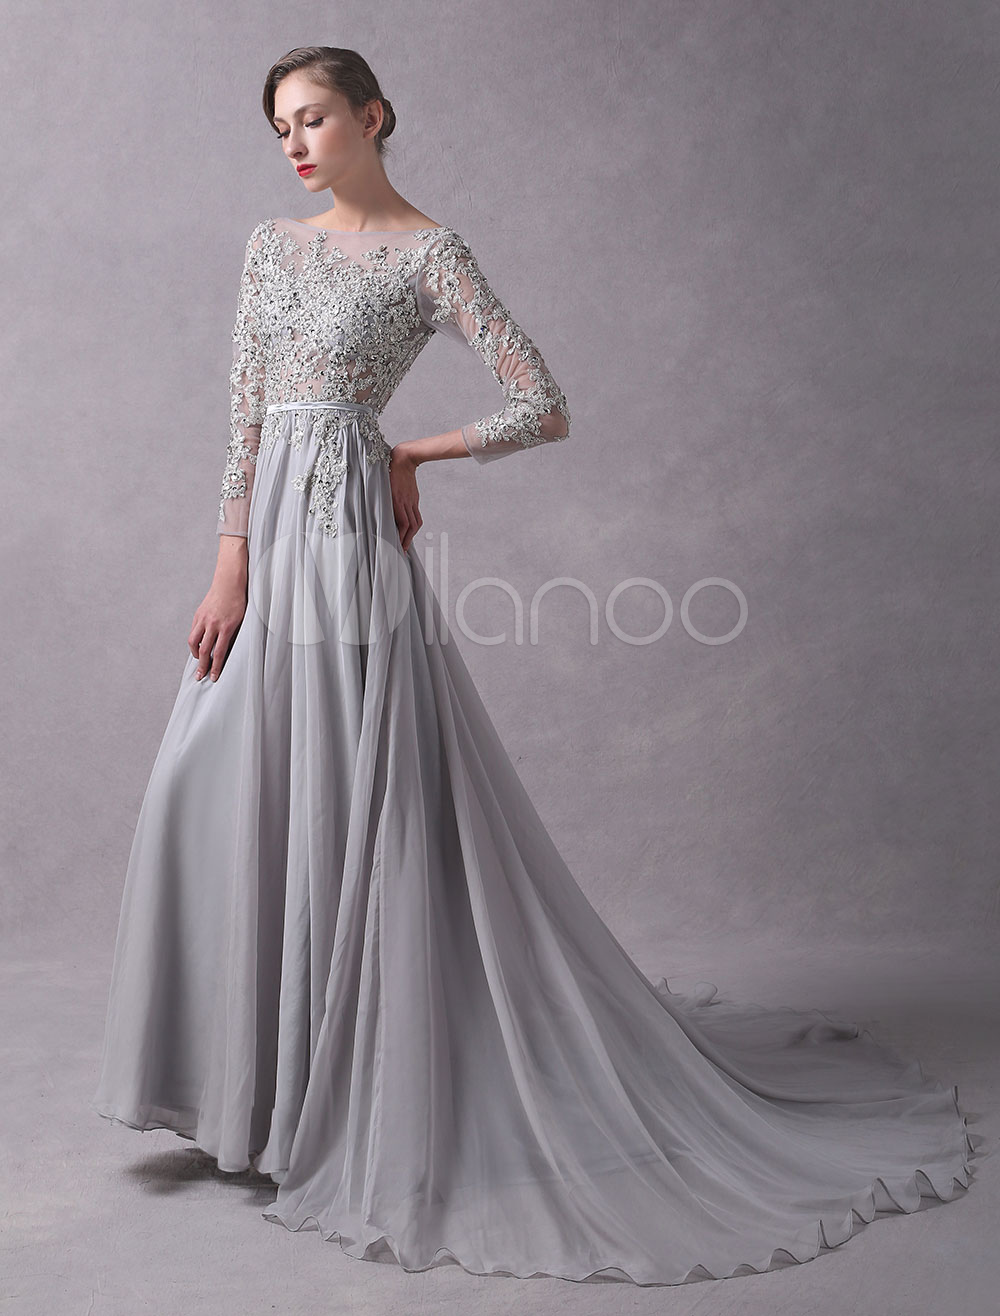 gray long sleeve formal dresses